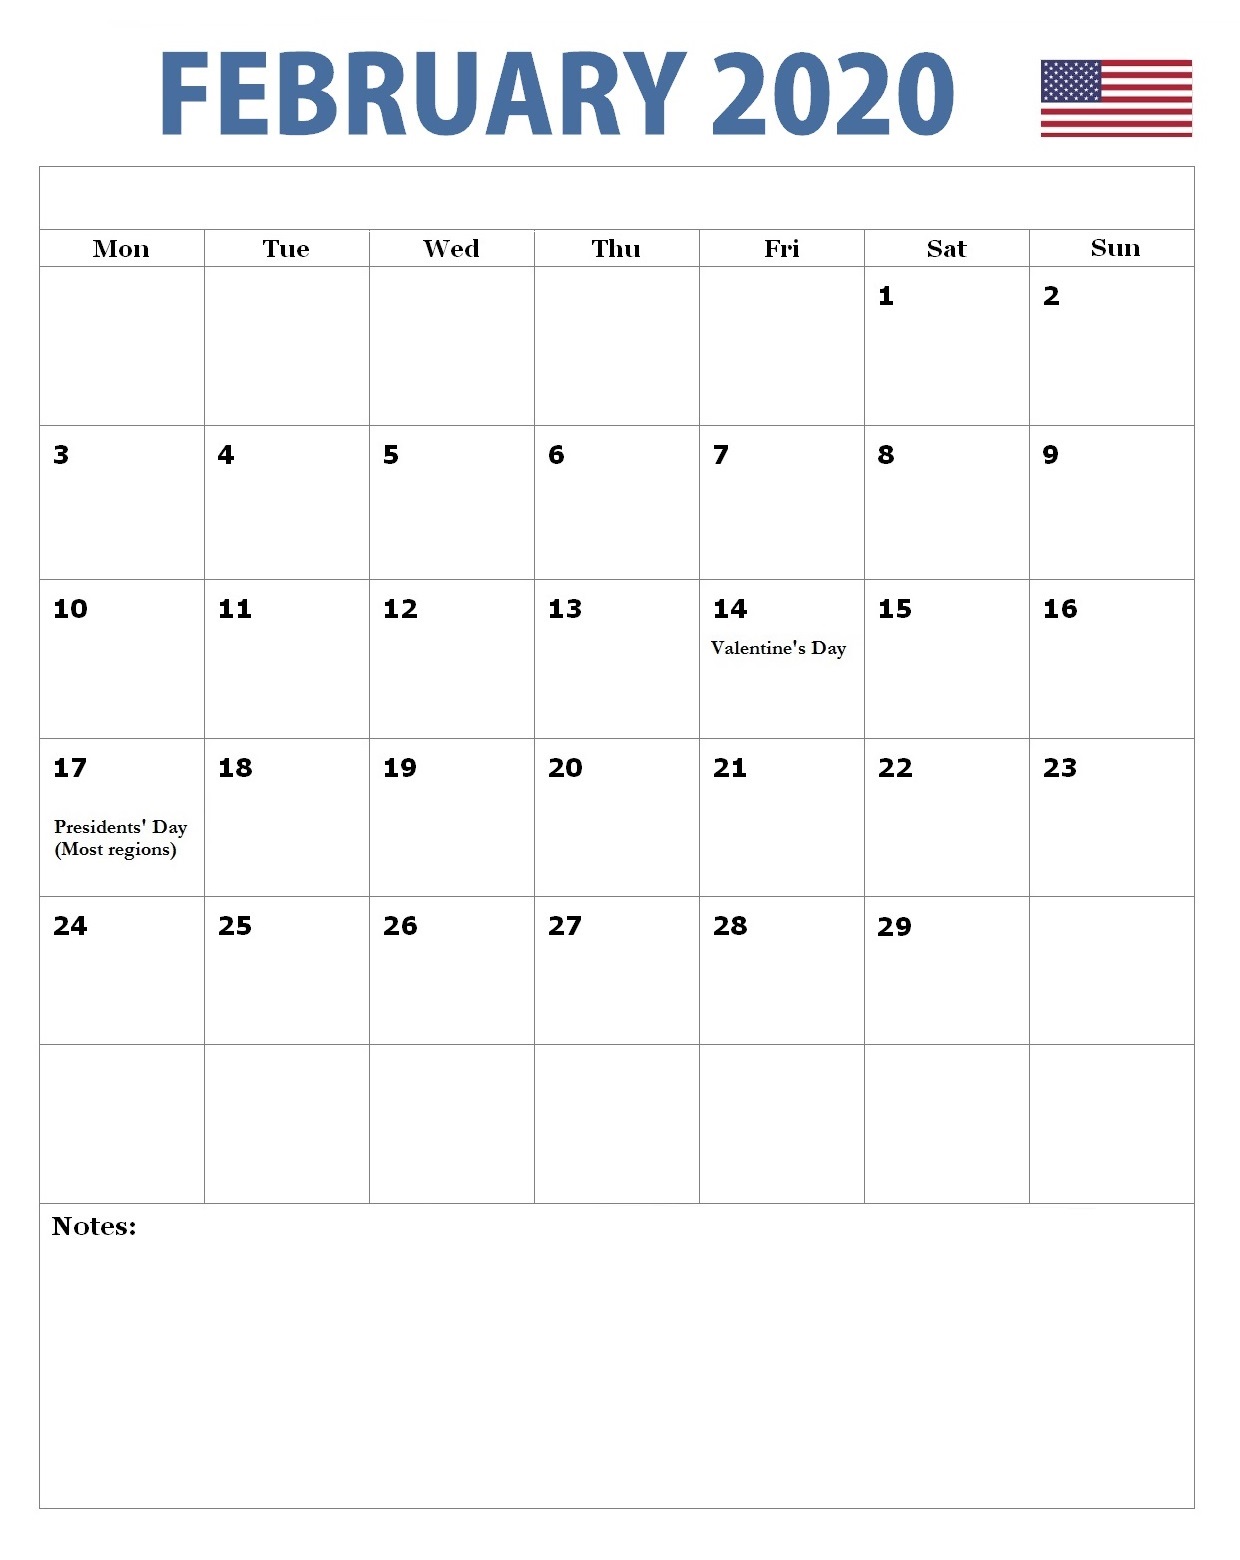 February 2020 American Holidays Calendar